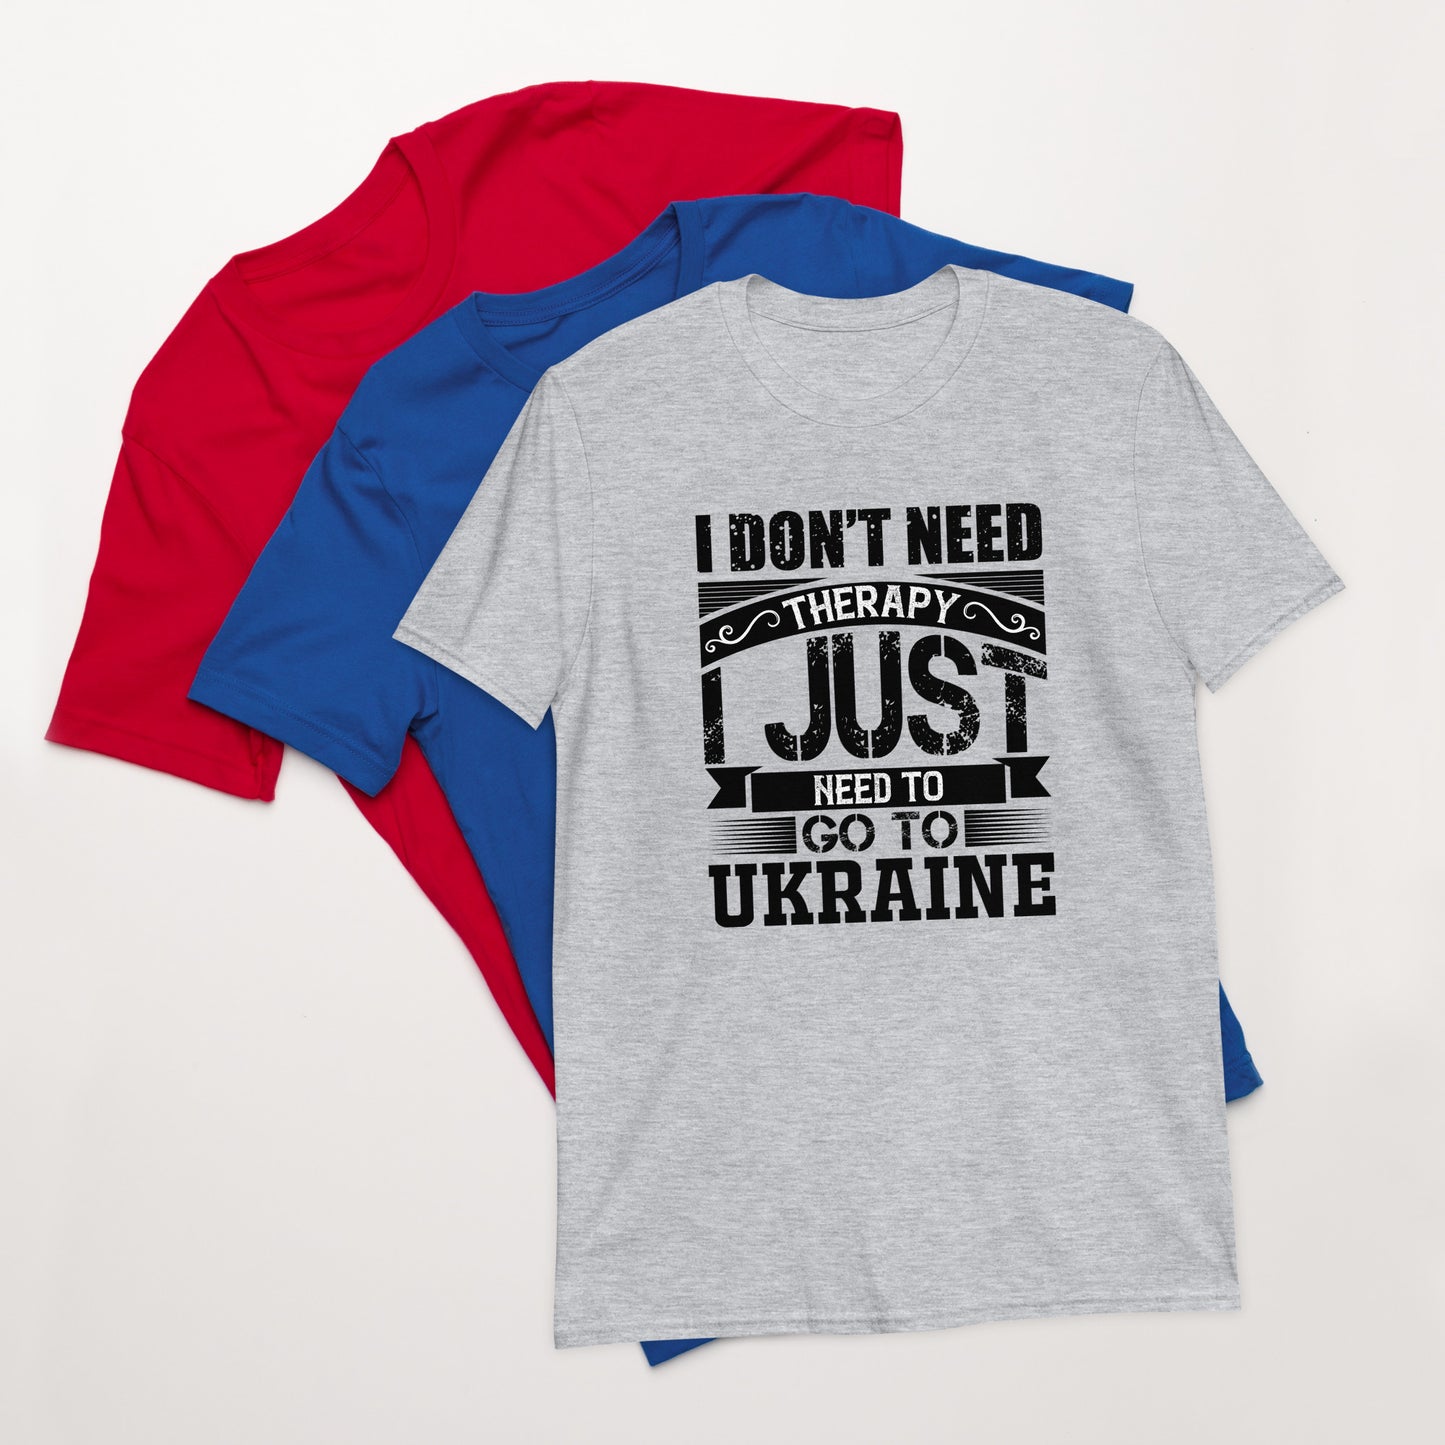 Short-Sleeve Unisex T-Shirt | Glory to Ukraine Glory to the Heroes